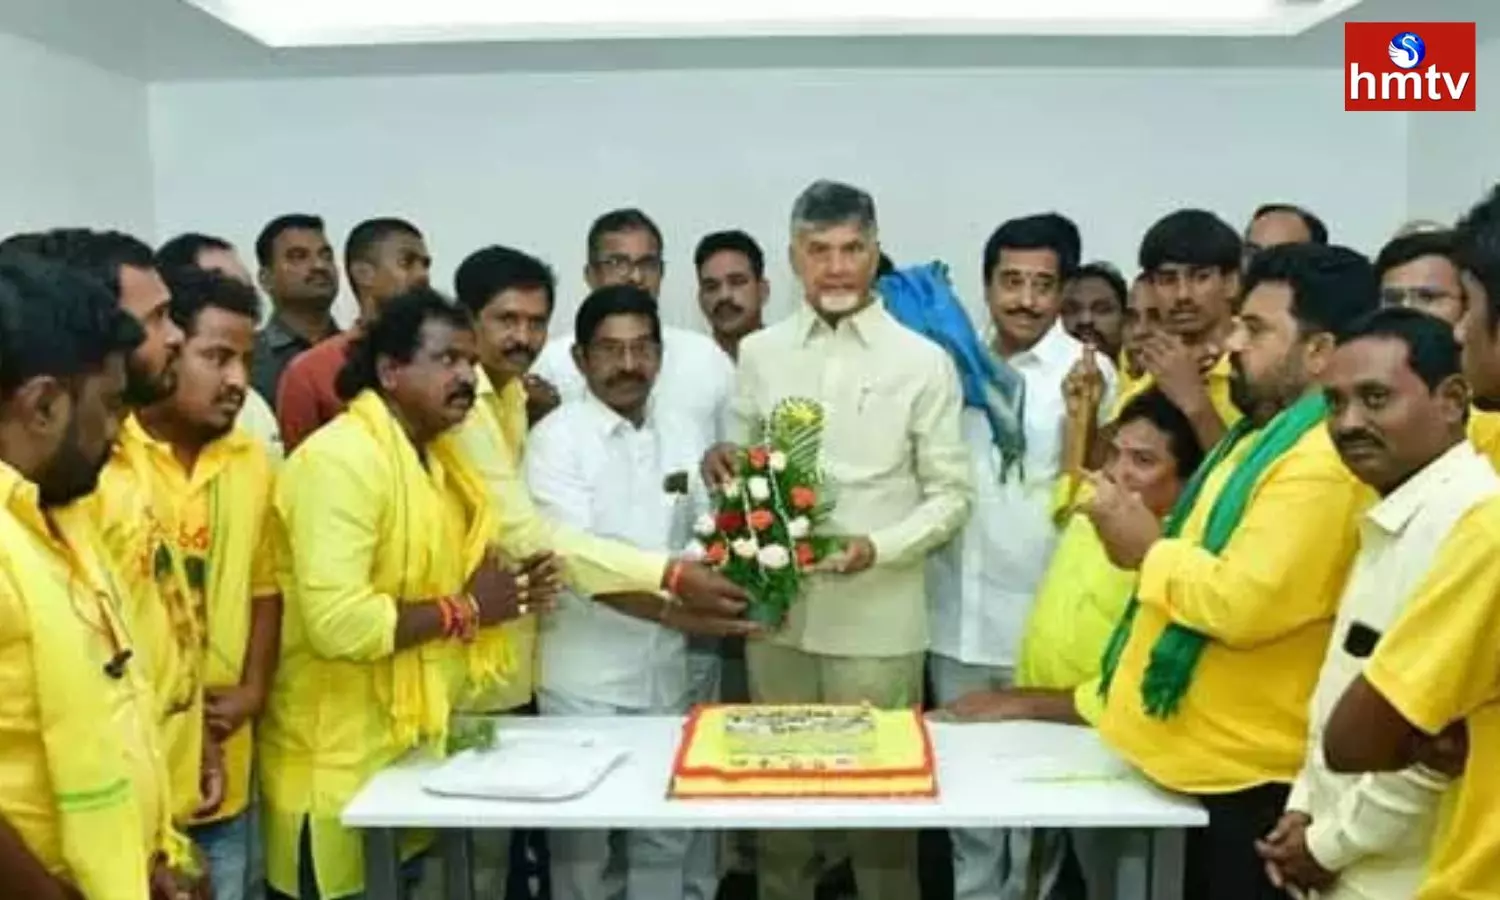 TDP Chief Chandrababu cut the cake in Hyderabad